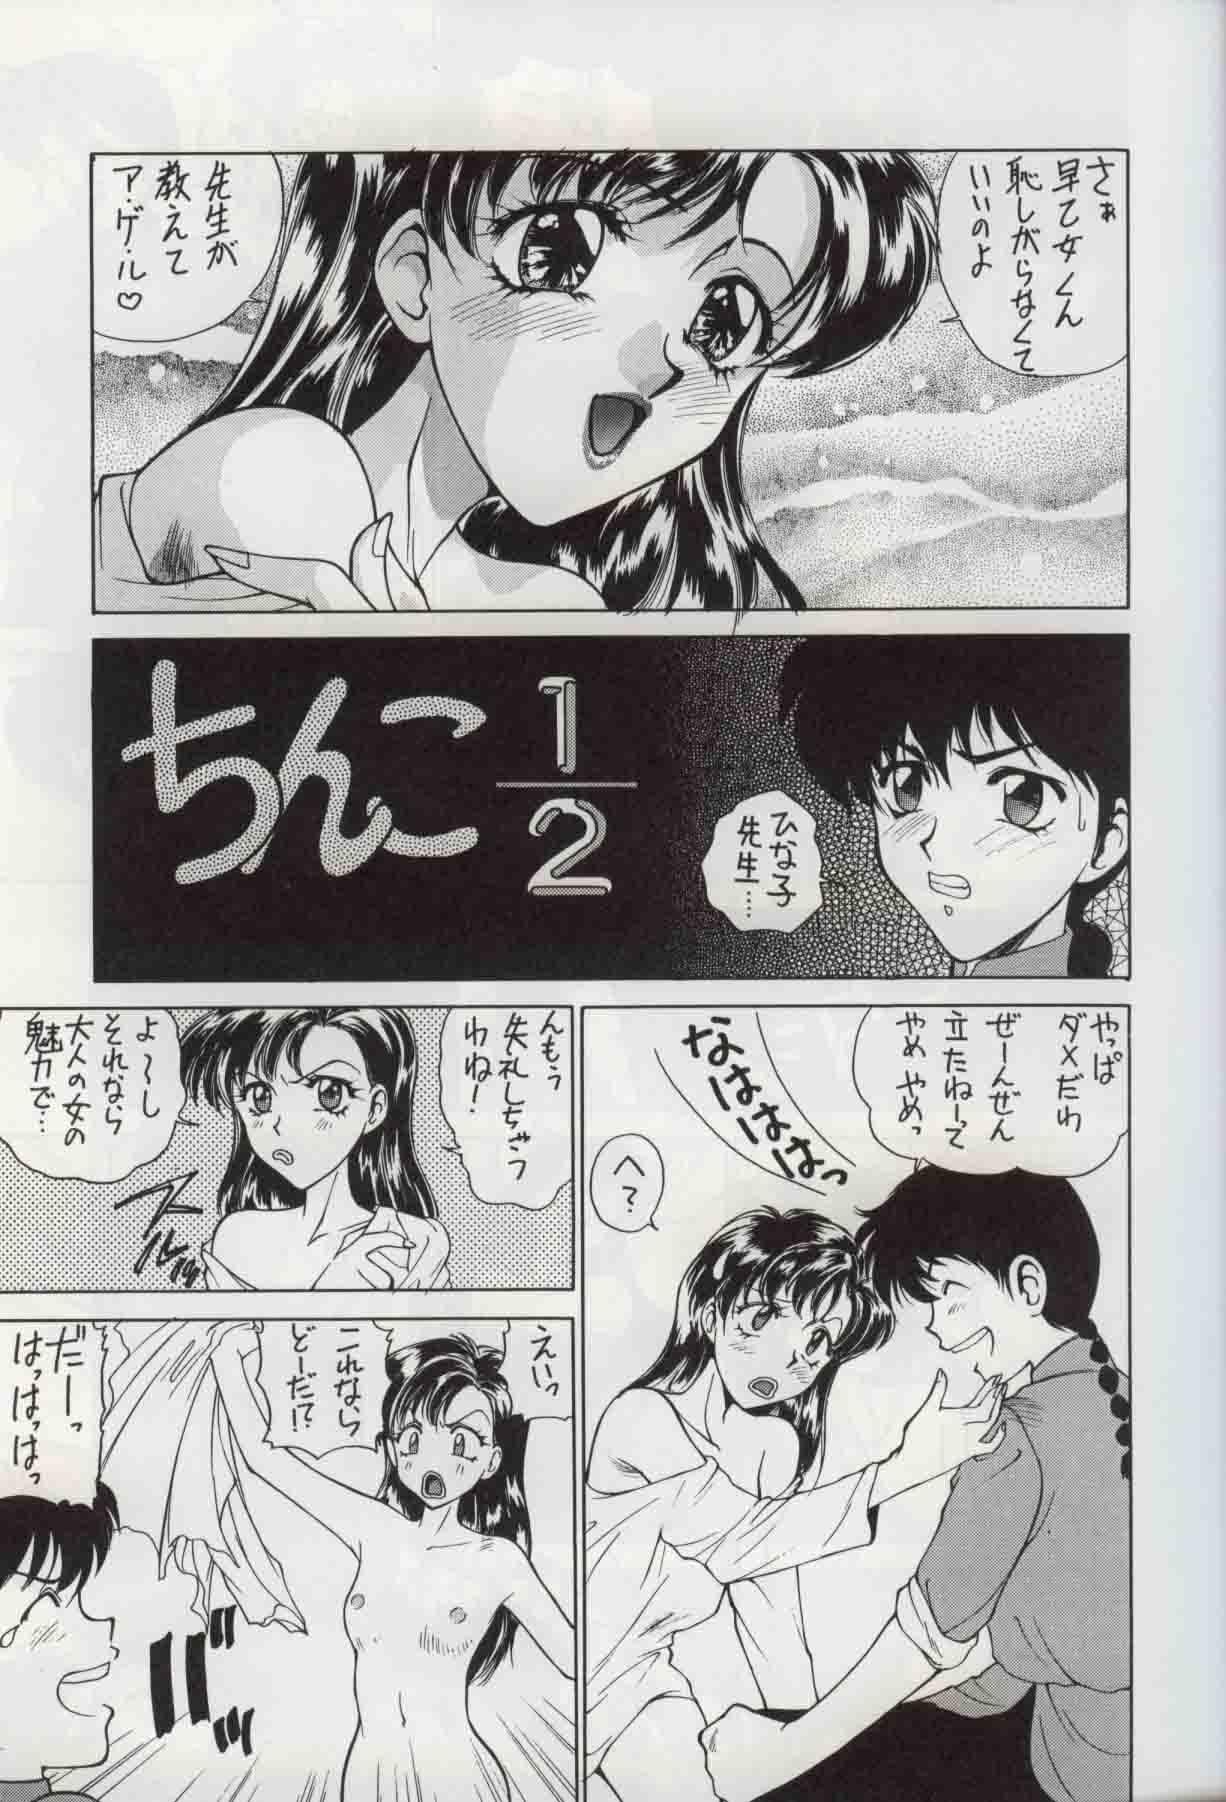 Long Hair Bakatopia 4 - Sailor moon Ranma 12 Macross 7 Wedding peach Ping pong club Masseuse - Page 8